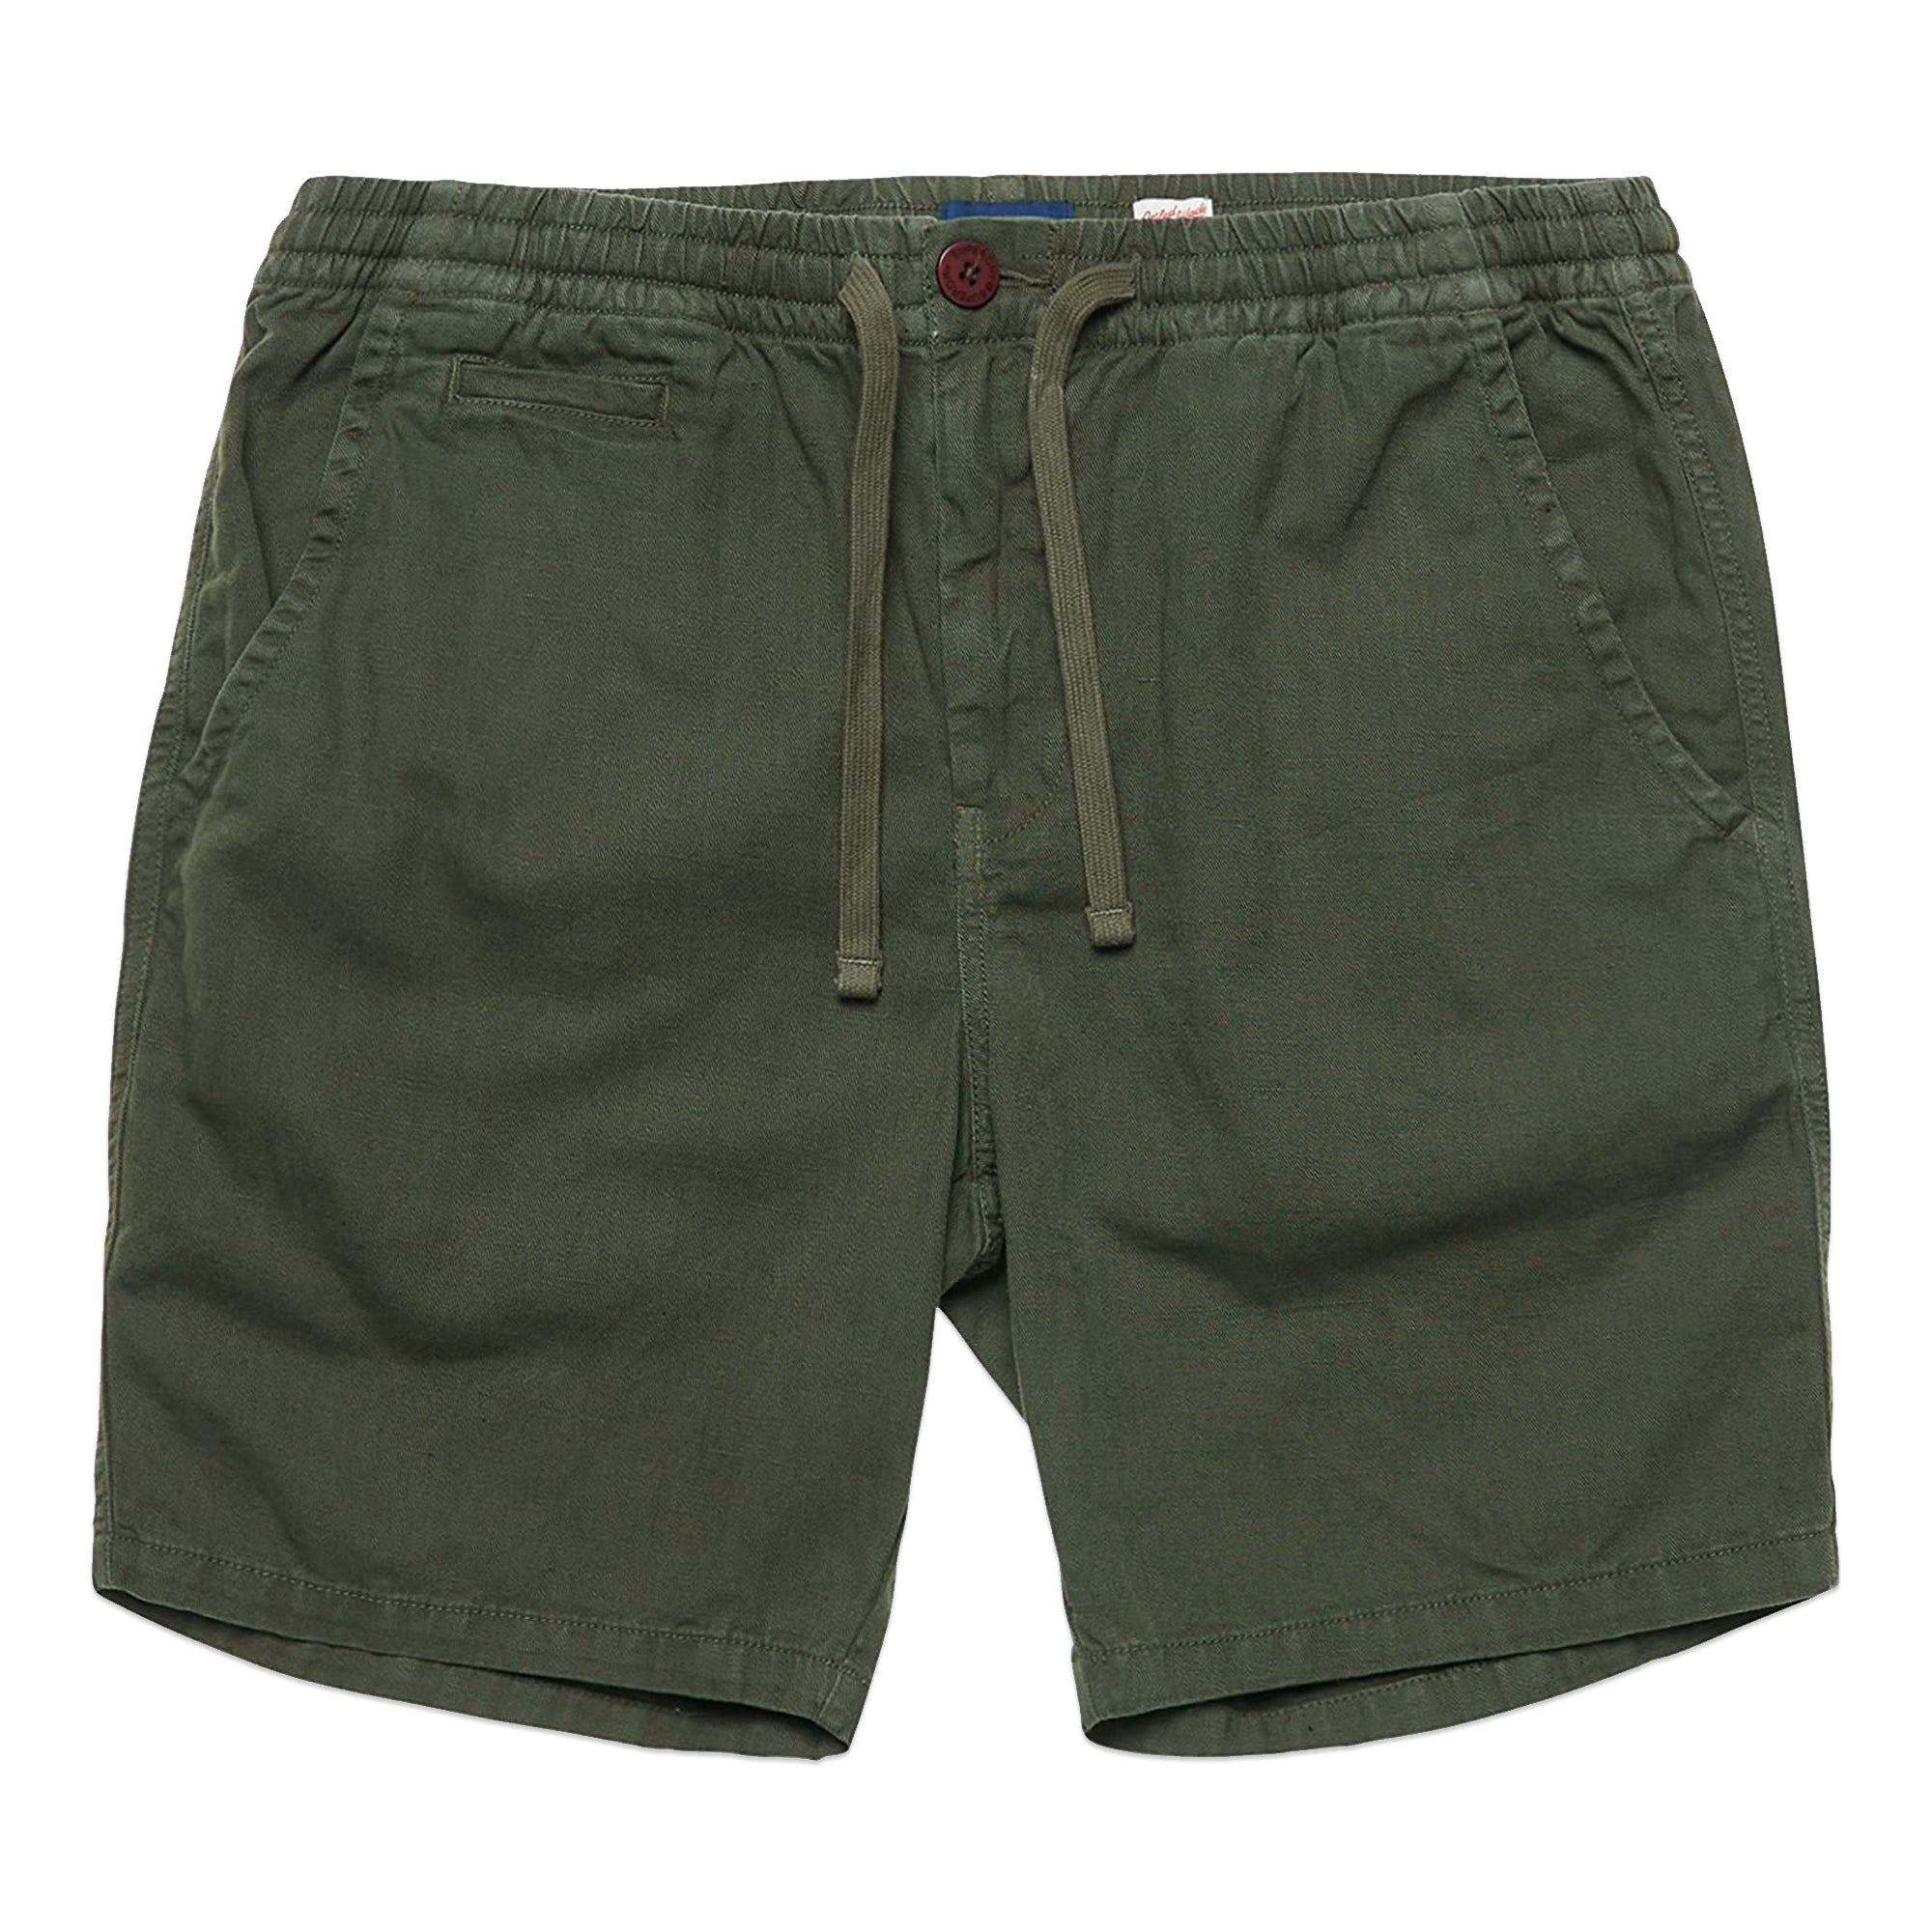 Superdry Vintage Overdyed Shorts - Dark Moss